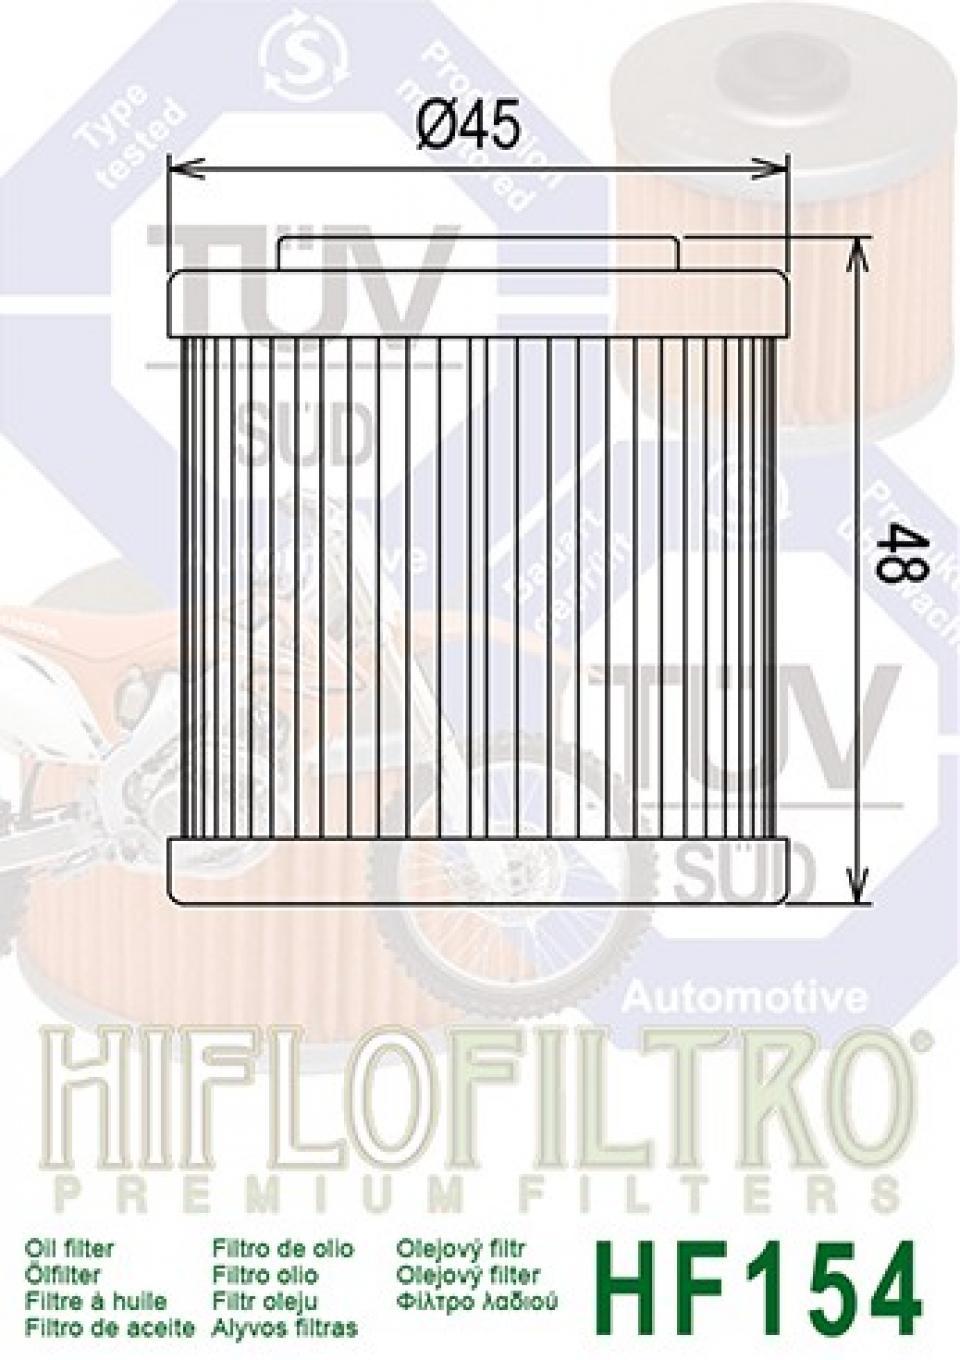 Filtre à huile Hiflo Filtro pour Moto Husqvarna 610 TC 1999-2000 Neuf